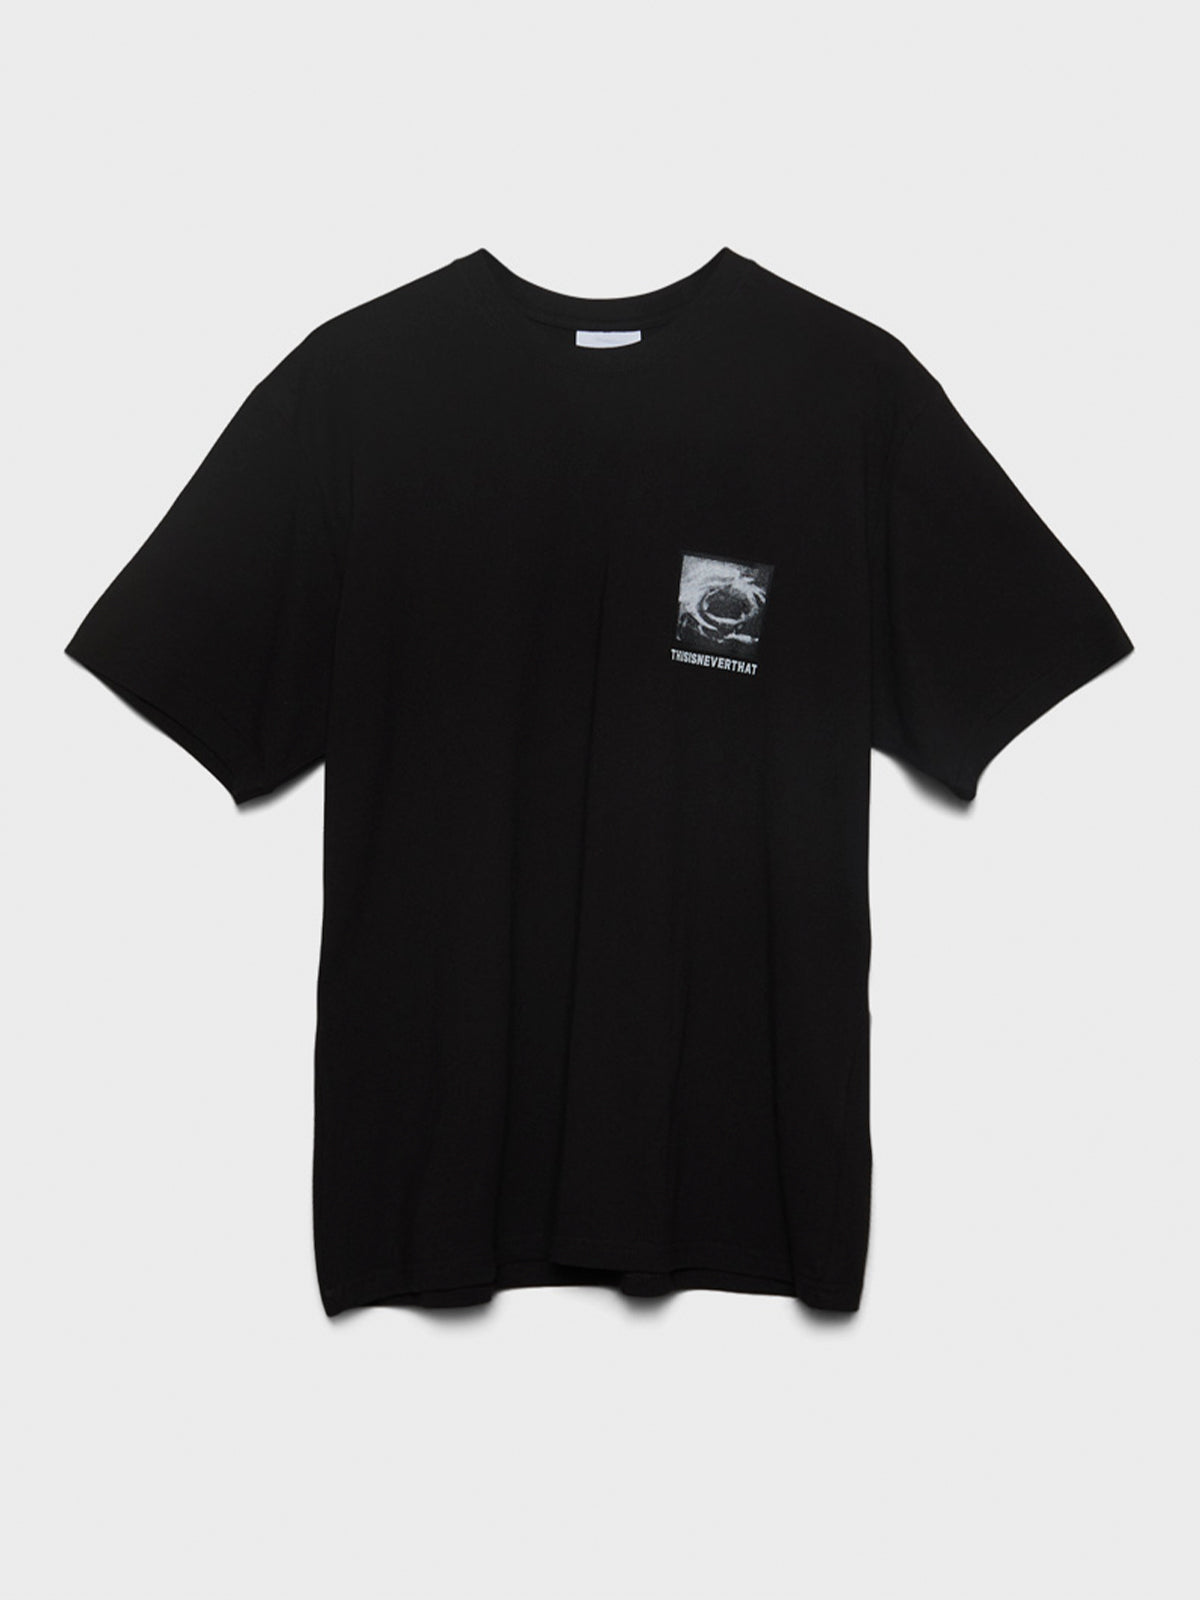 Permutations T-Shirt in Black